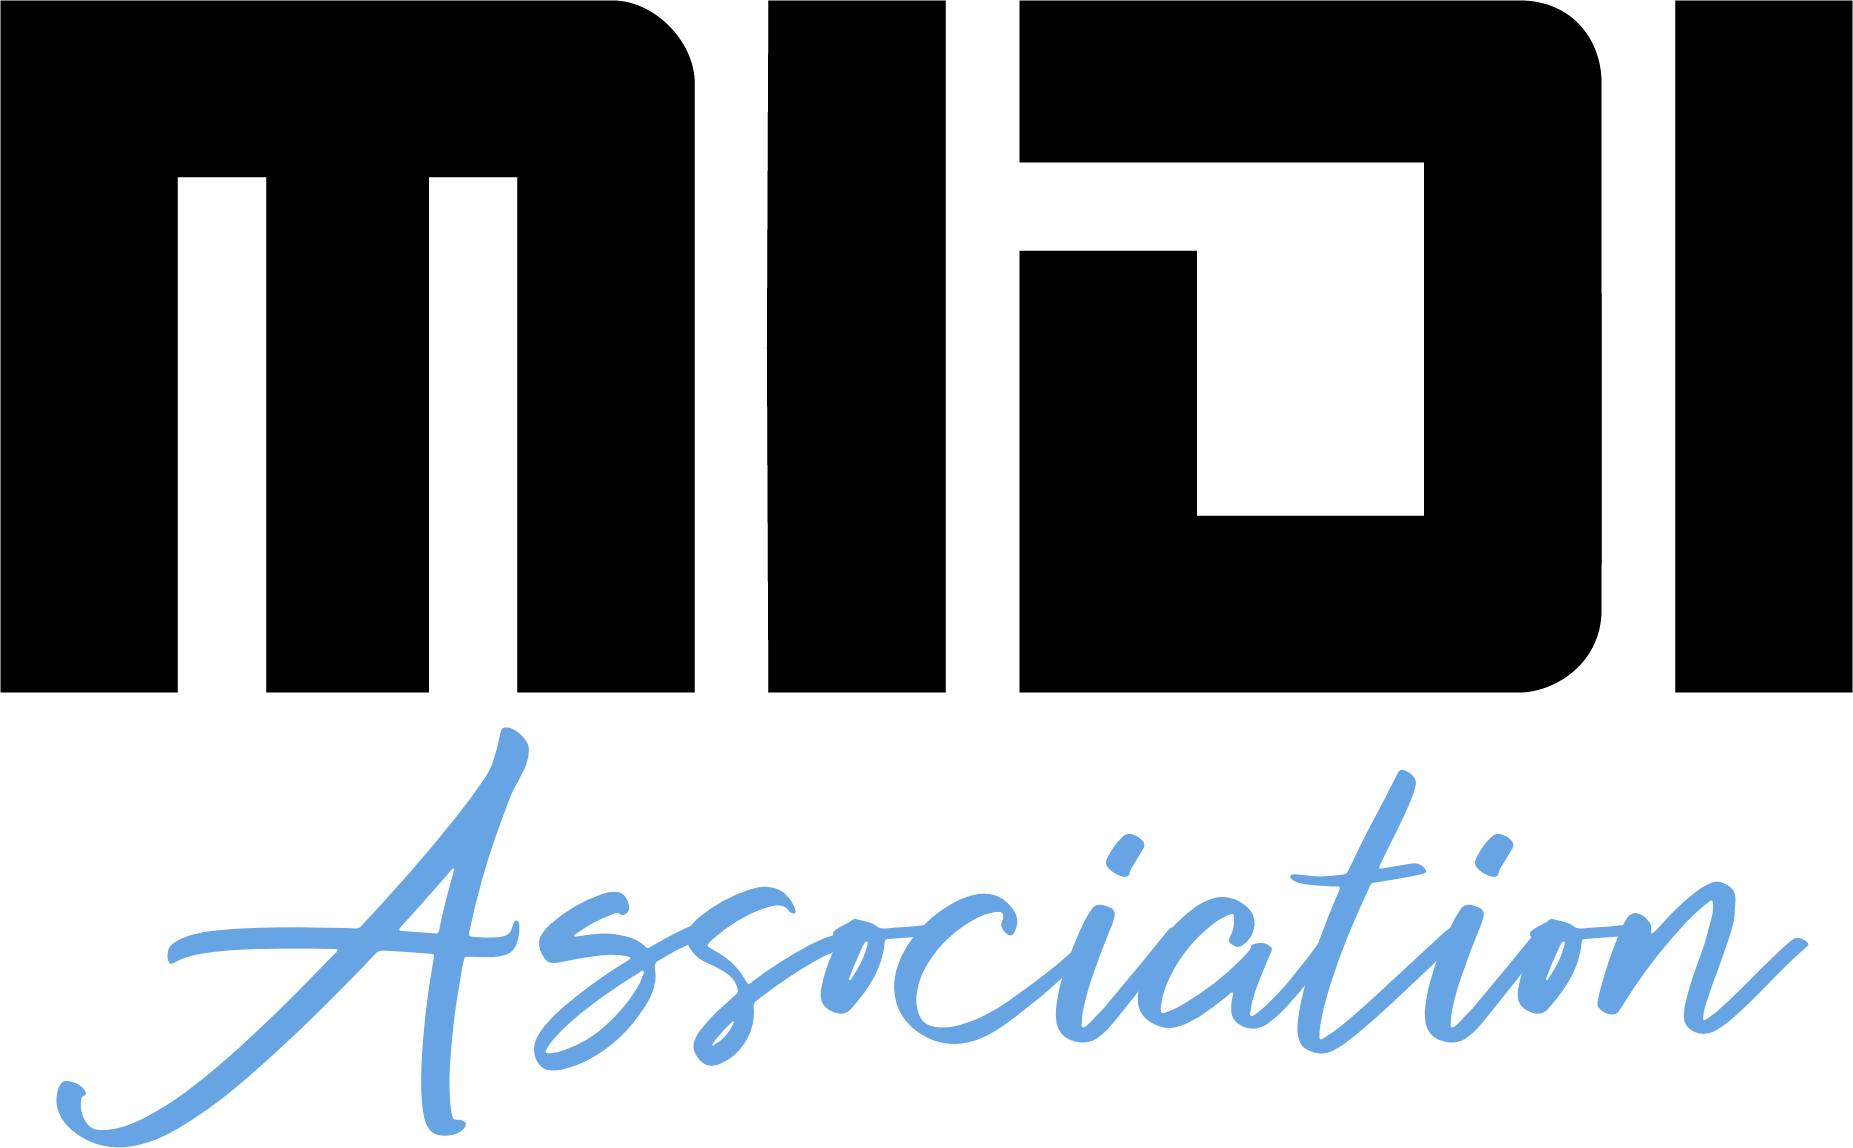 MIDI Association Logo